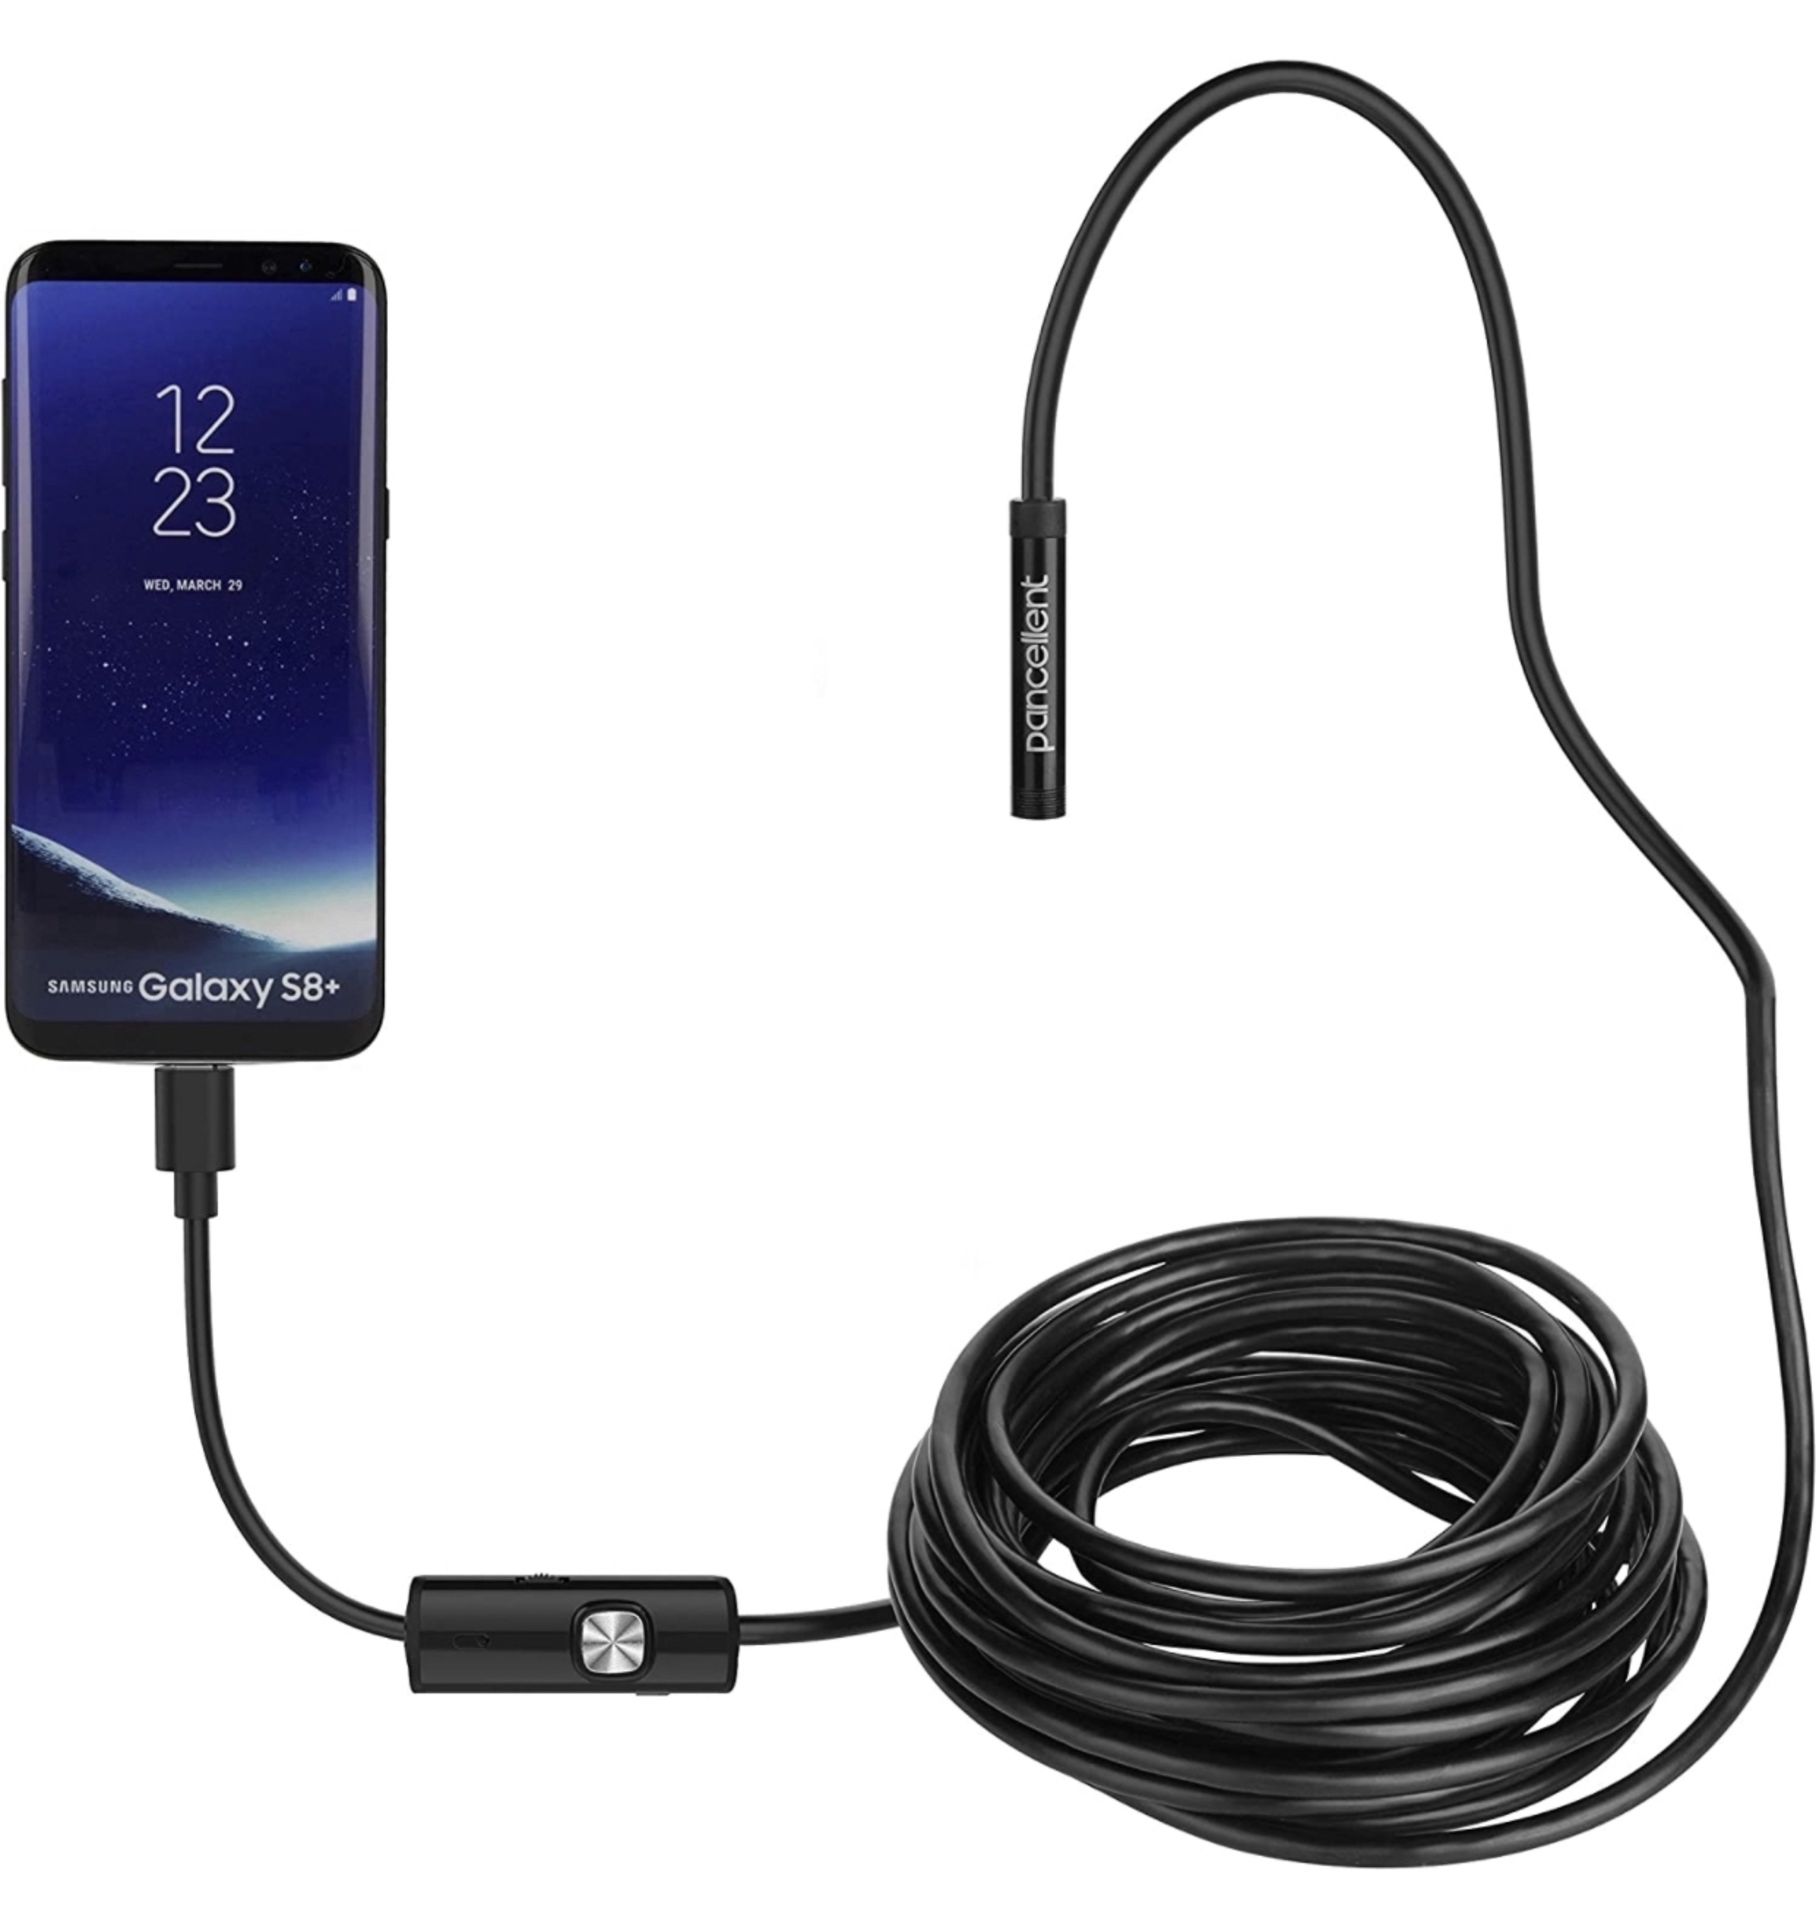 Pancellent USB Android Endoscope 2.0 Megapixel Waterproof Borescope Inspection Camera